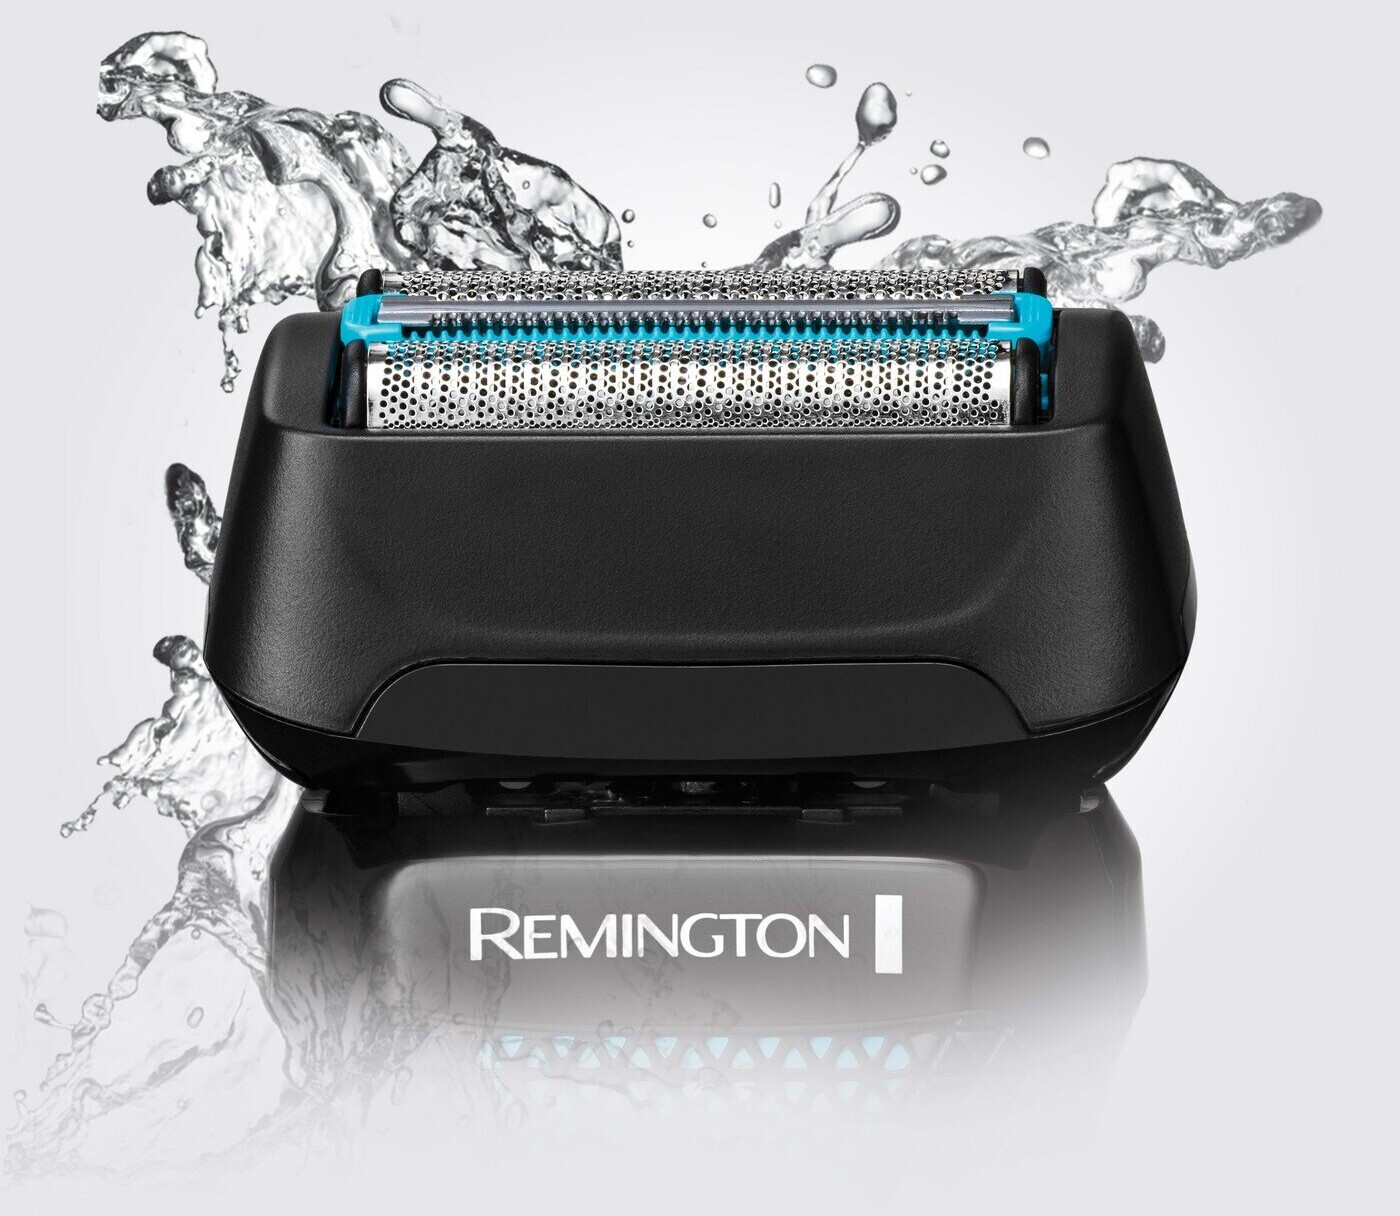 Remington F6 Style Series Aqua F6000 ab € 57,53 | Preisvergleich bei